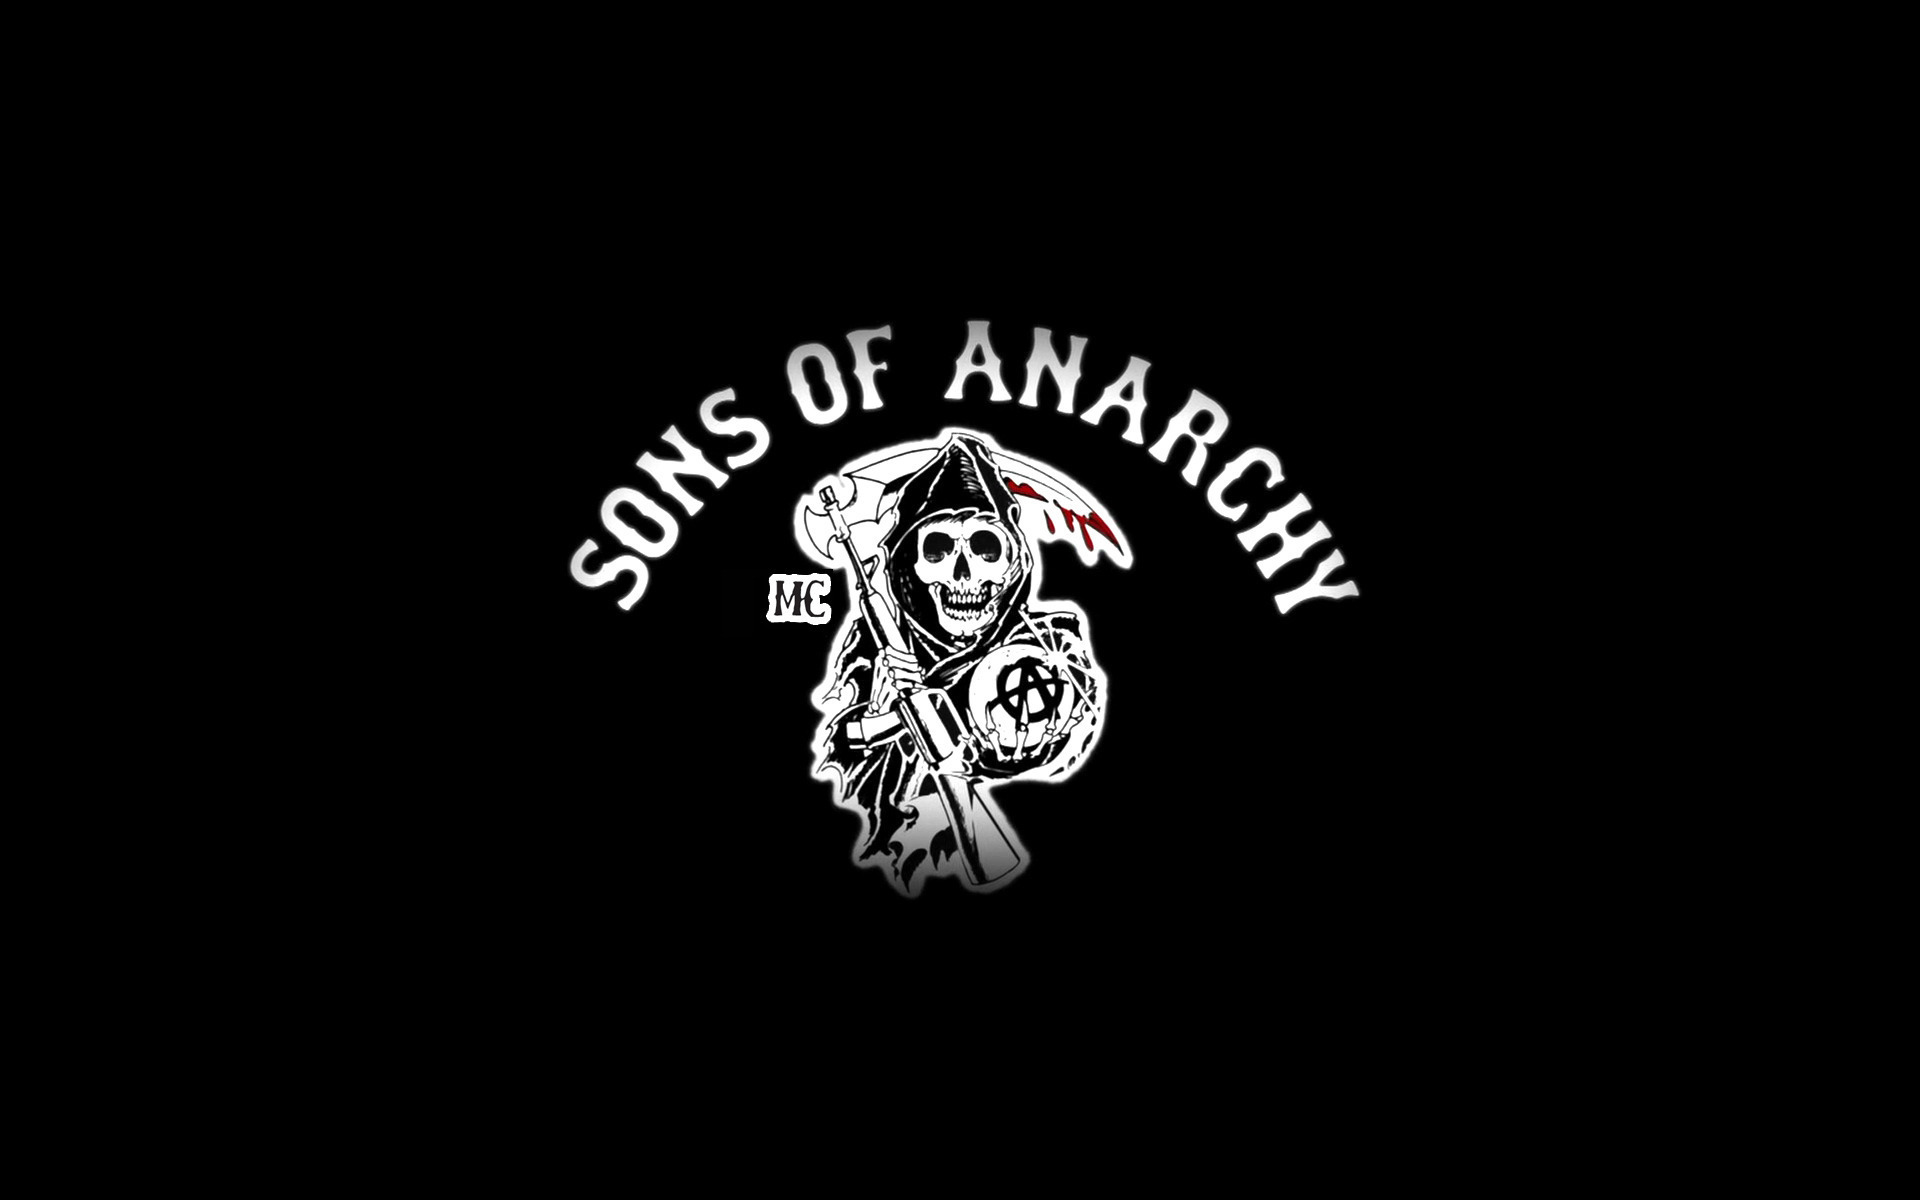 cinema, sons of anarchy, logos, background, black